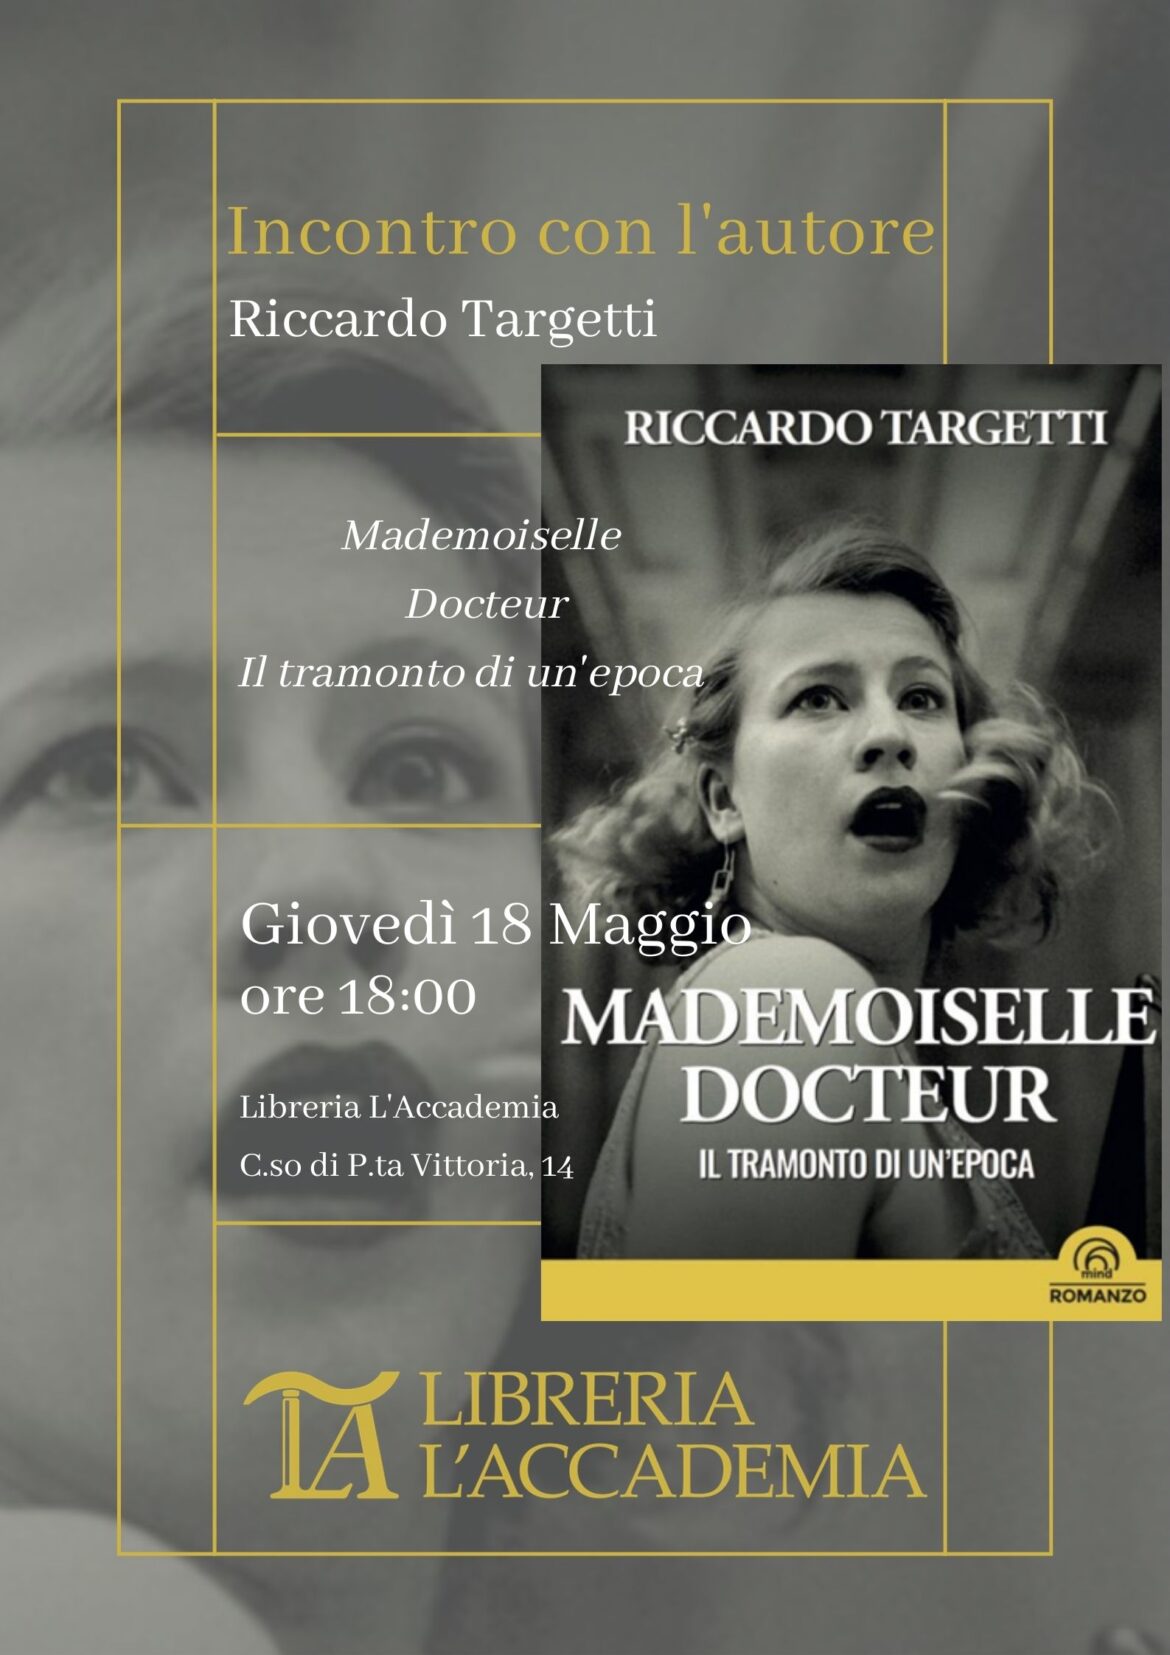 Mademoiselle Docteur locandina Milano 18 maggio